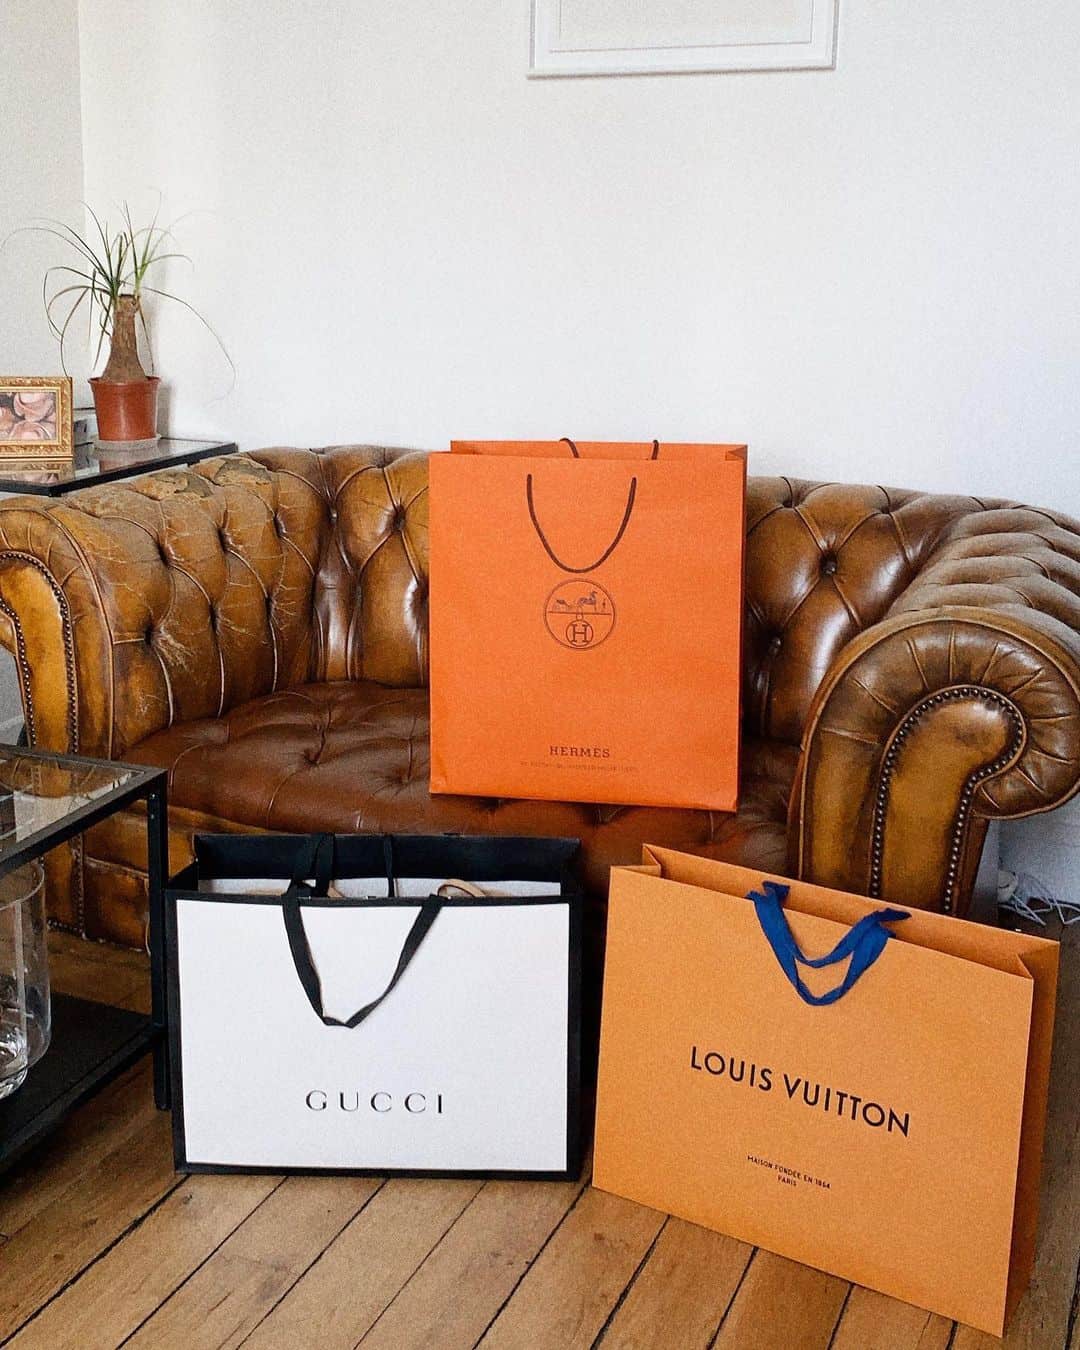 luxury shopping bags in Paris